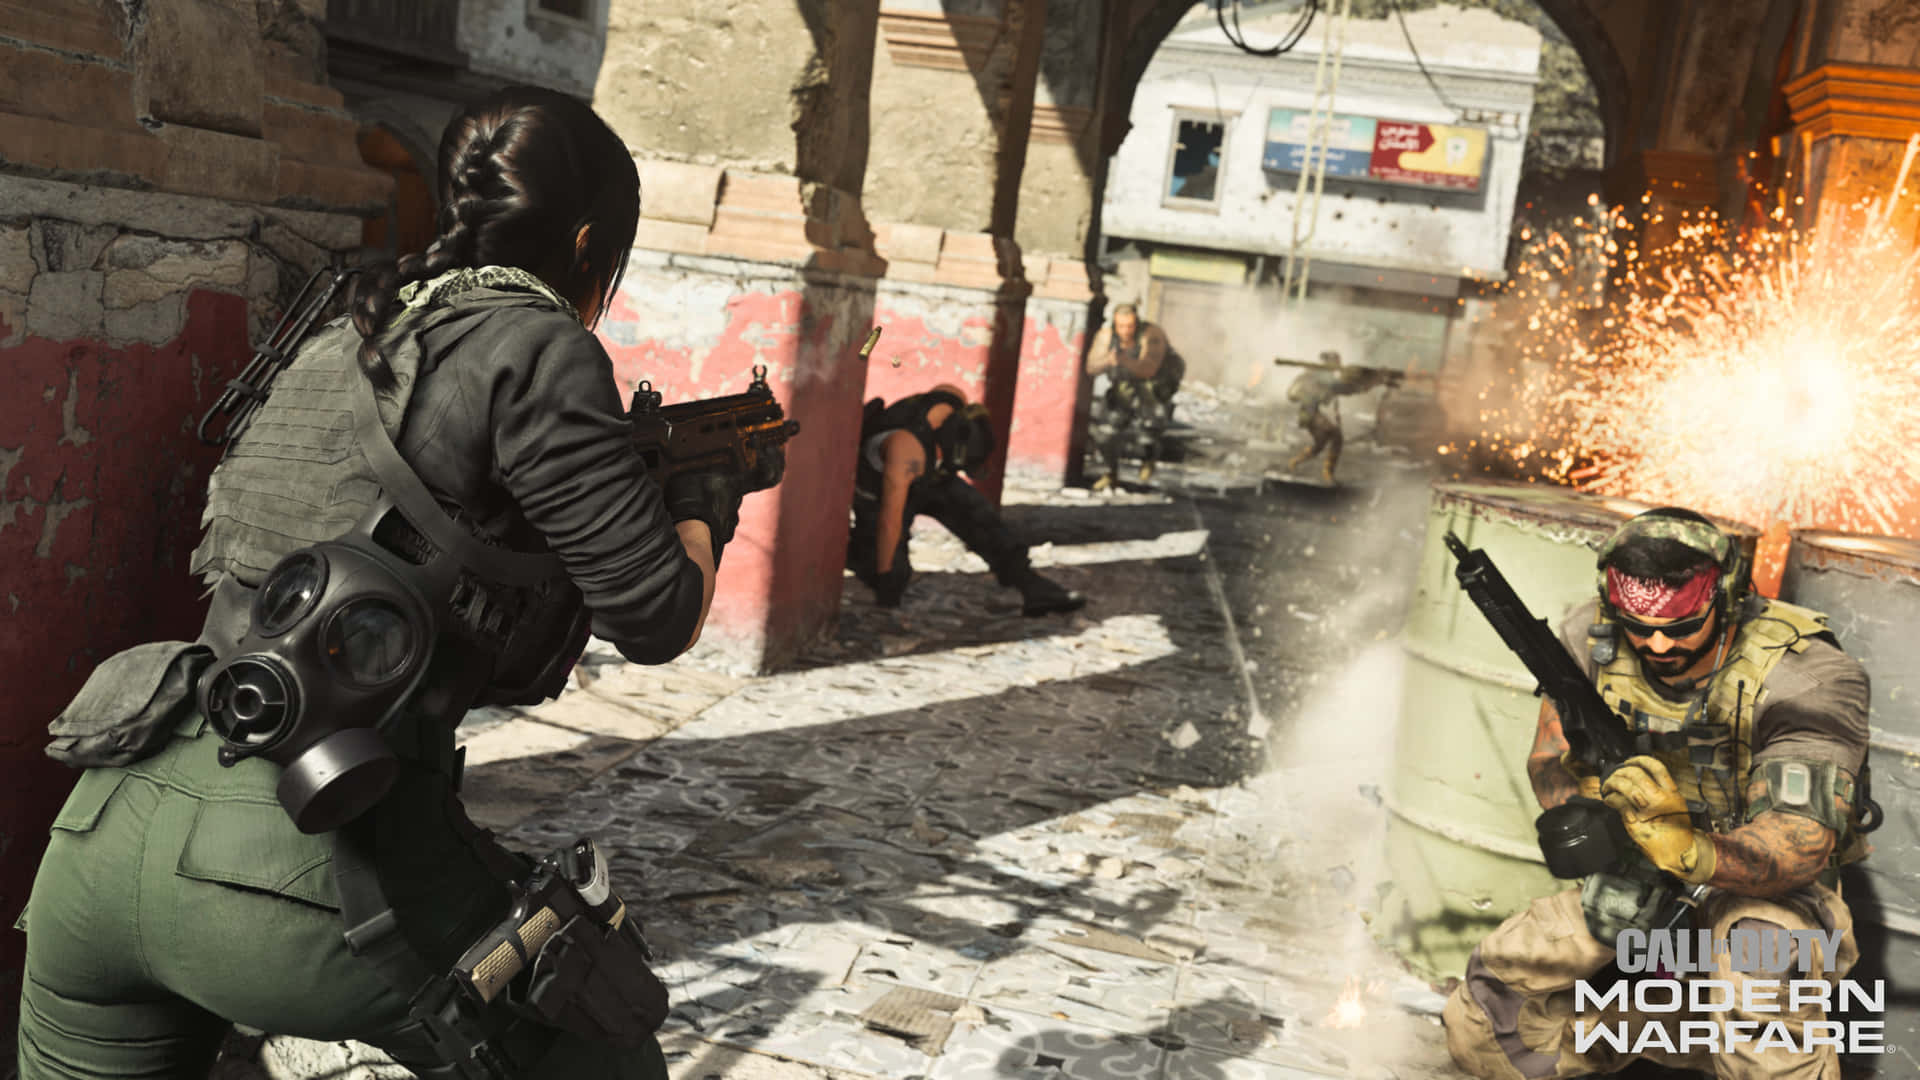 4kcall Of Duty Modern Warfare Bakgrundssoldater I Stadsstrid